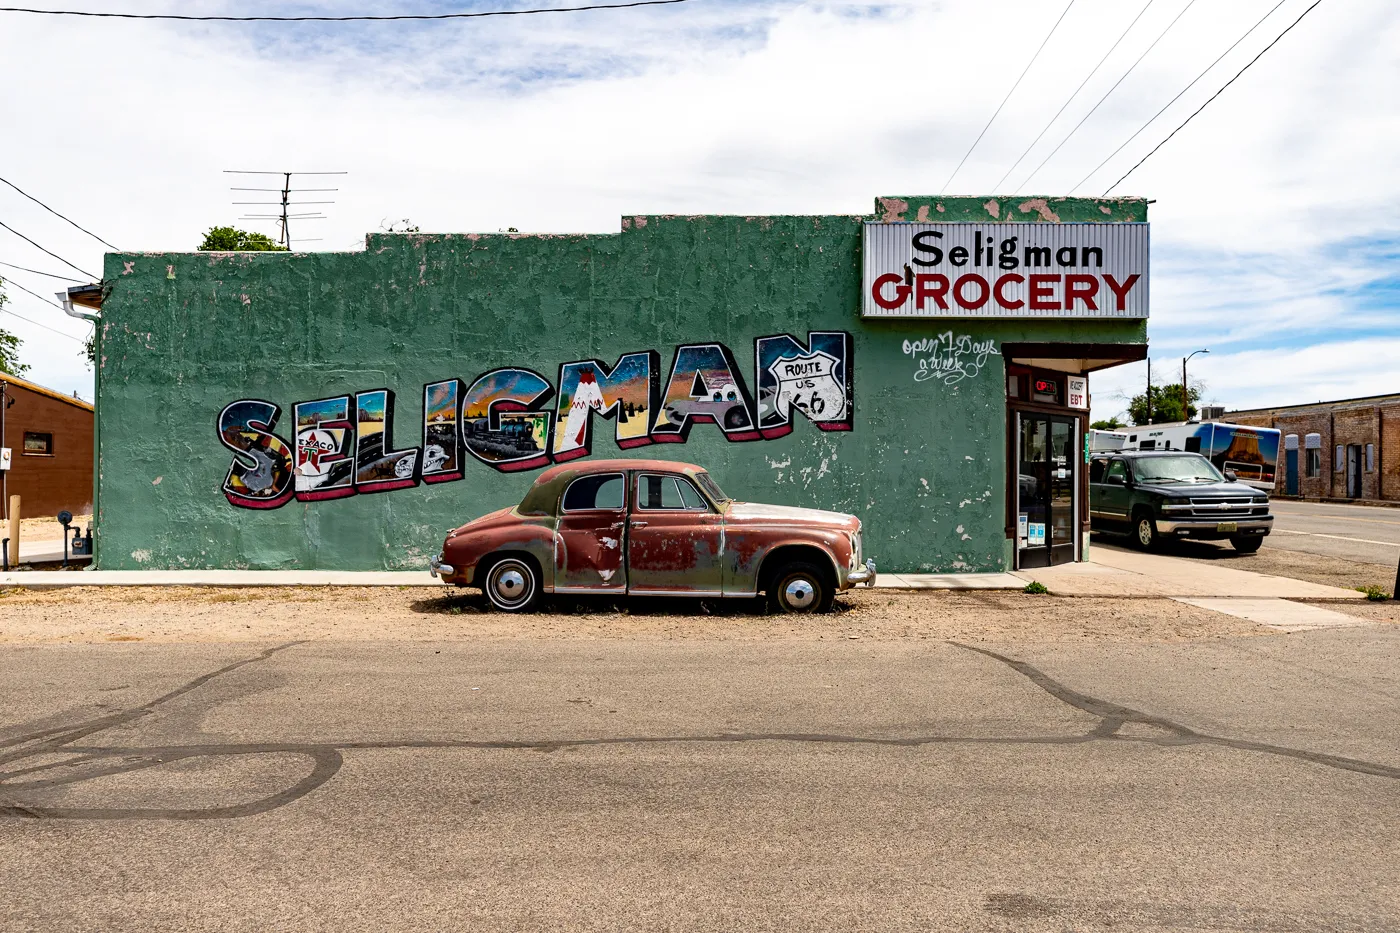 Seligman Grocery Mural on Arizona Route 66 - Green postcard mural in Seligman, Arizona